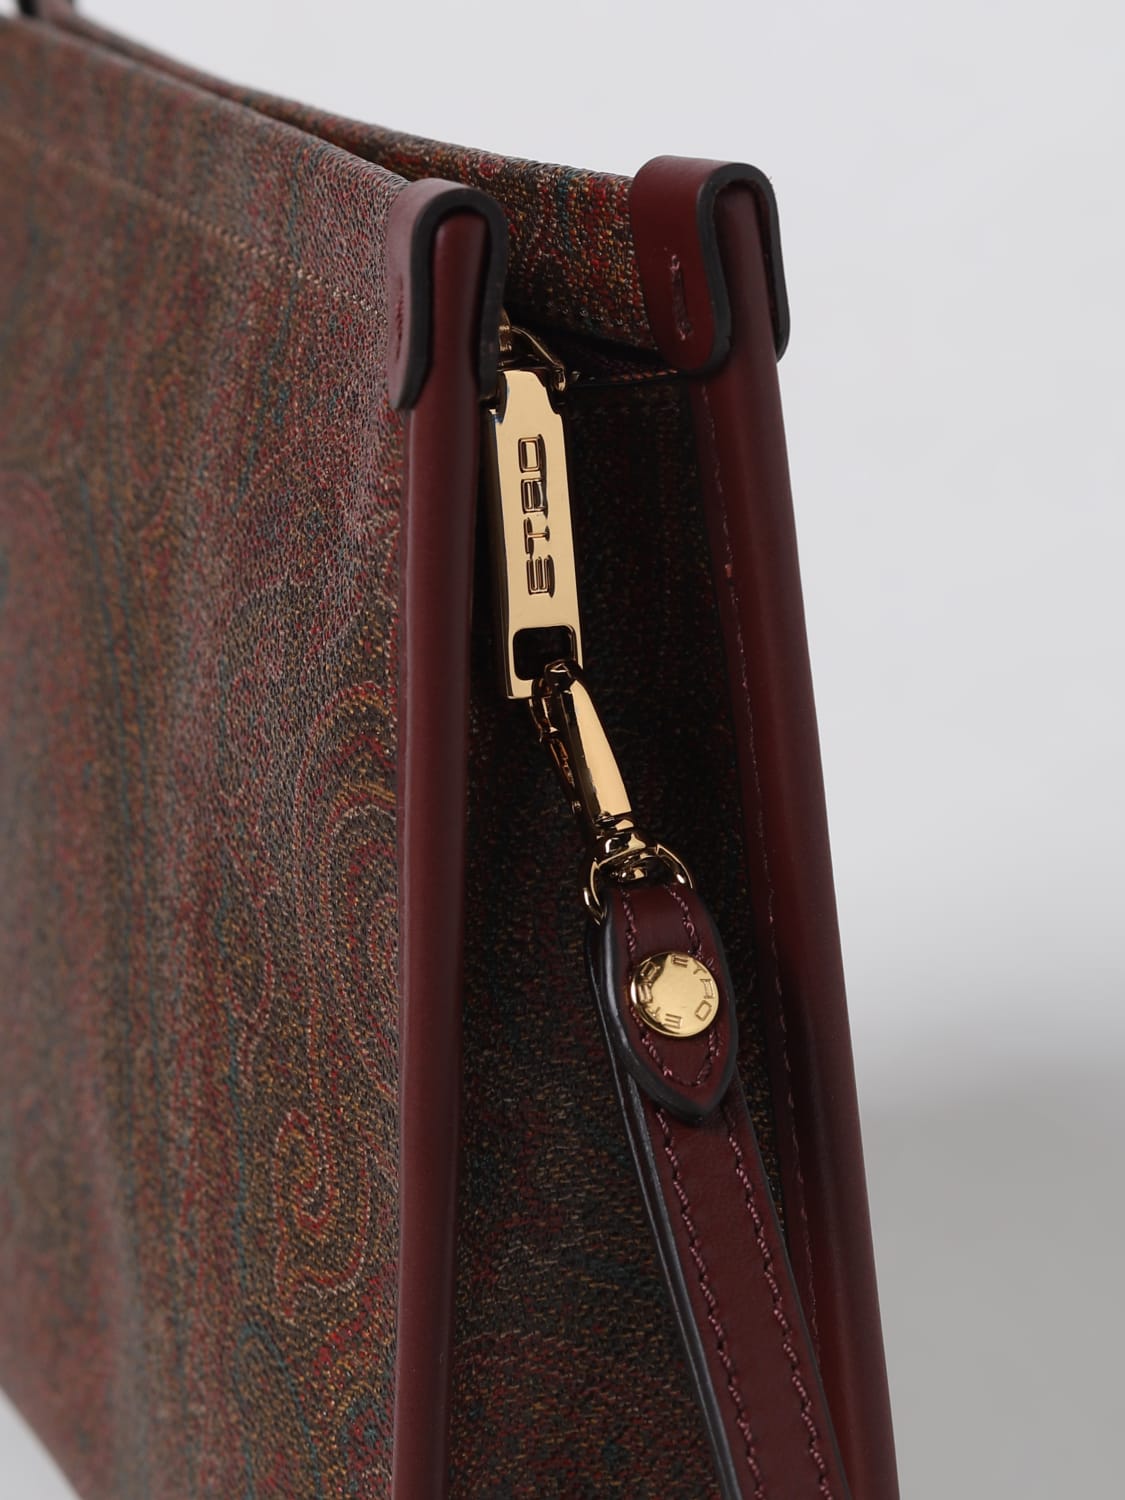 logo-detail zipped clutch bag, ETRO